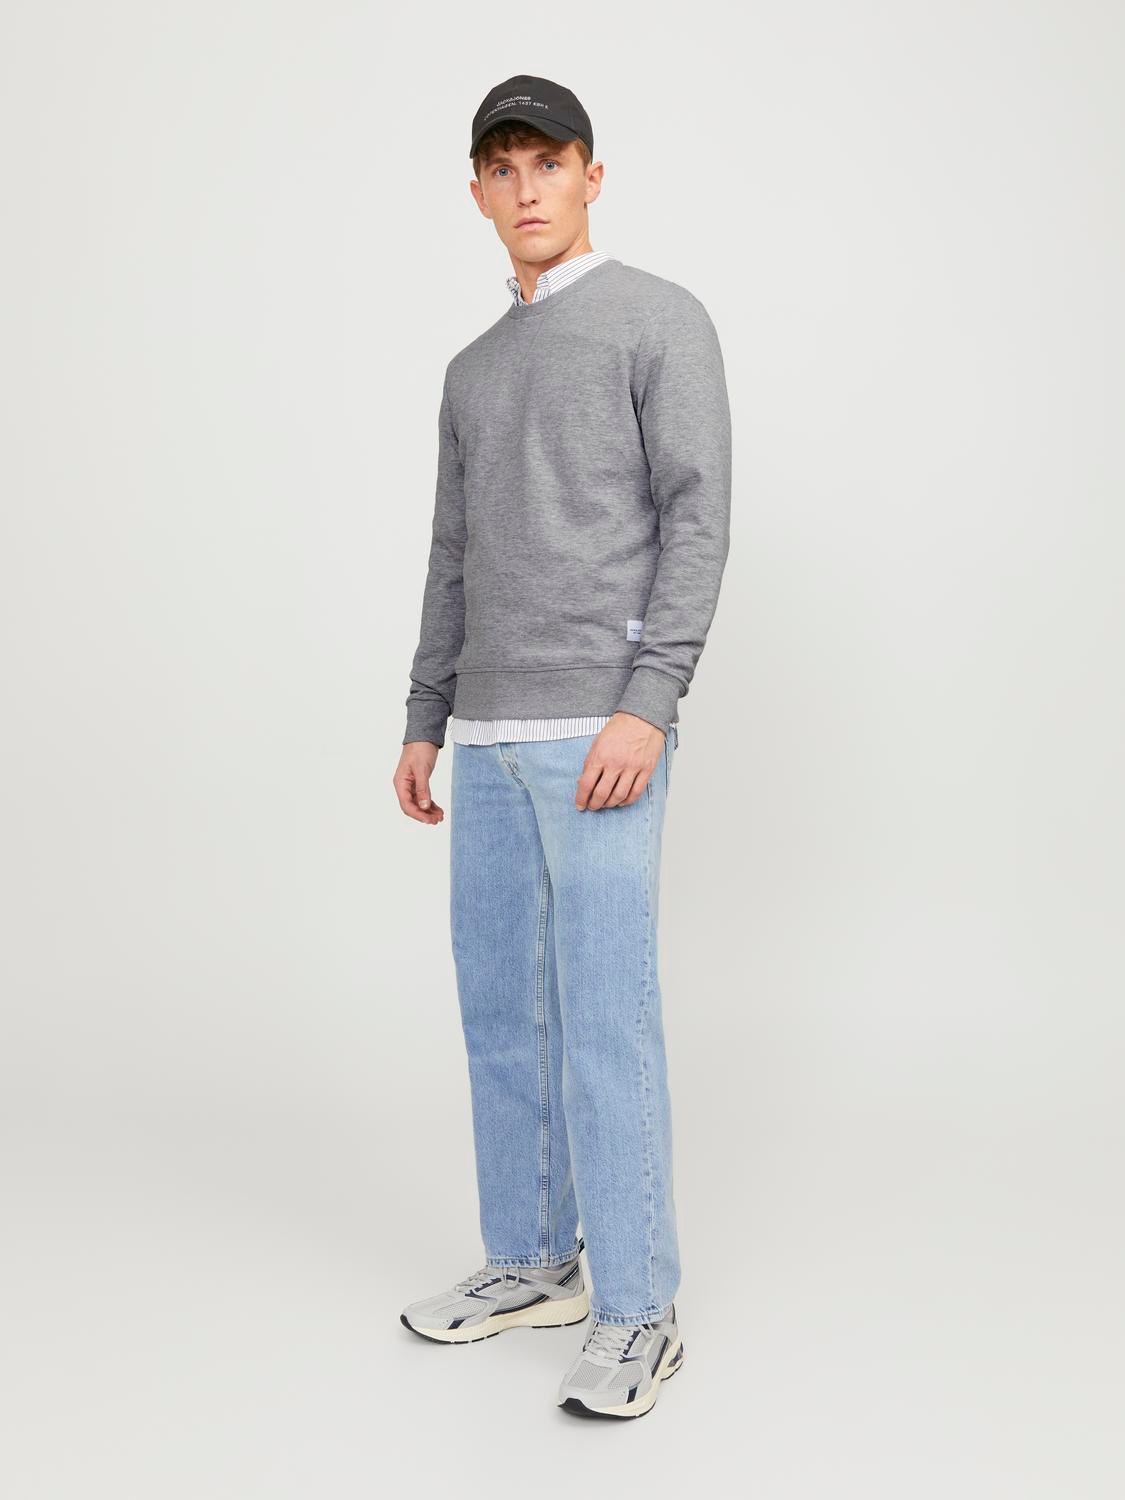 Jack & Jones Plain Sweatshirt -Light Grey Melange - 12181903